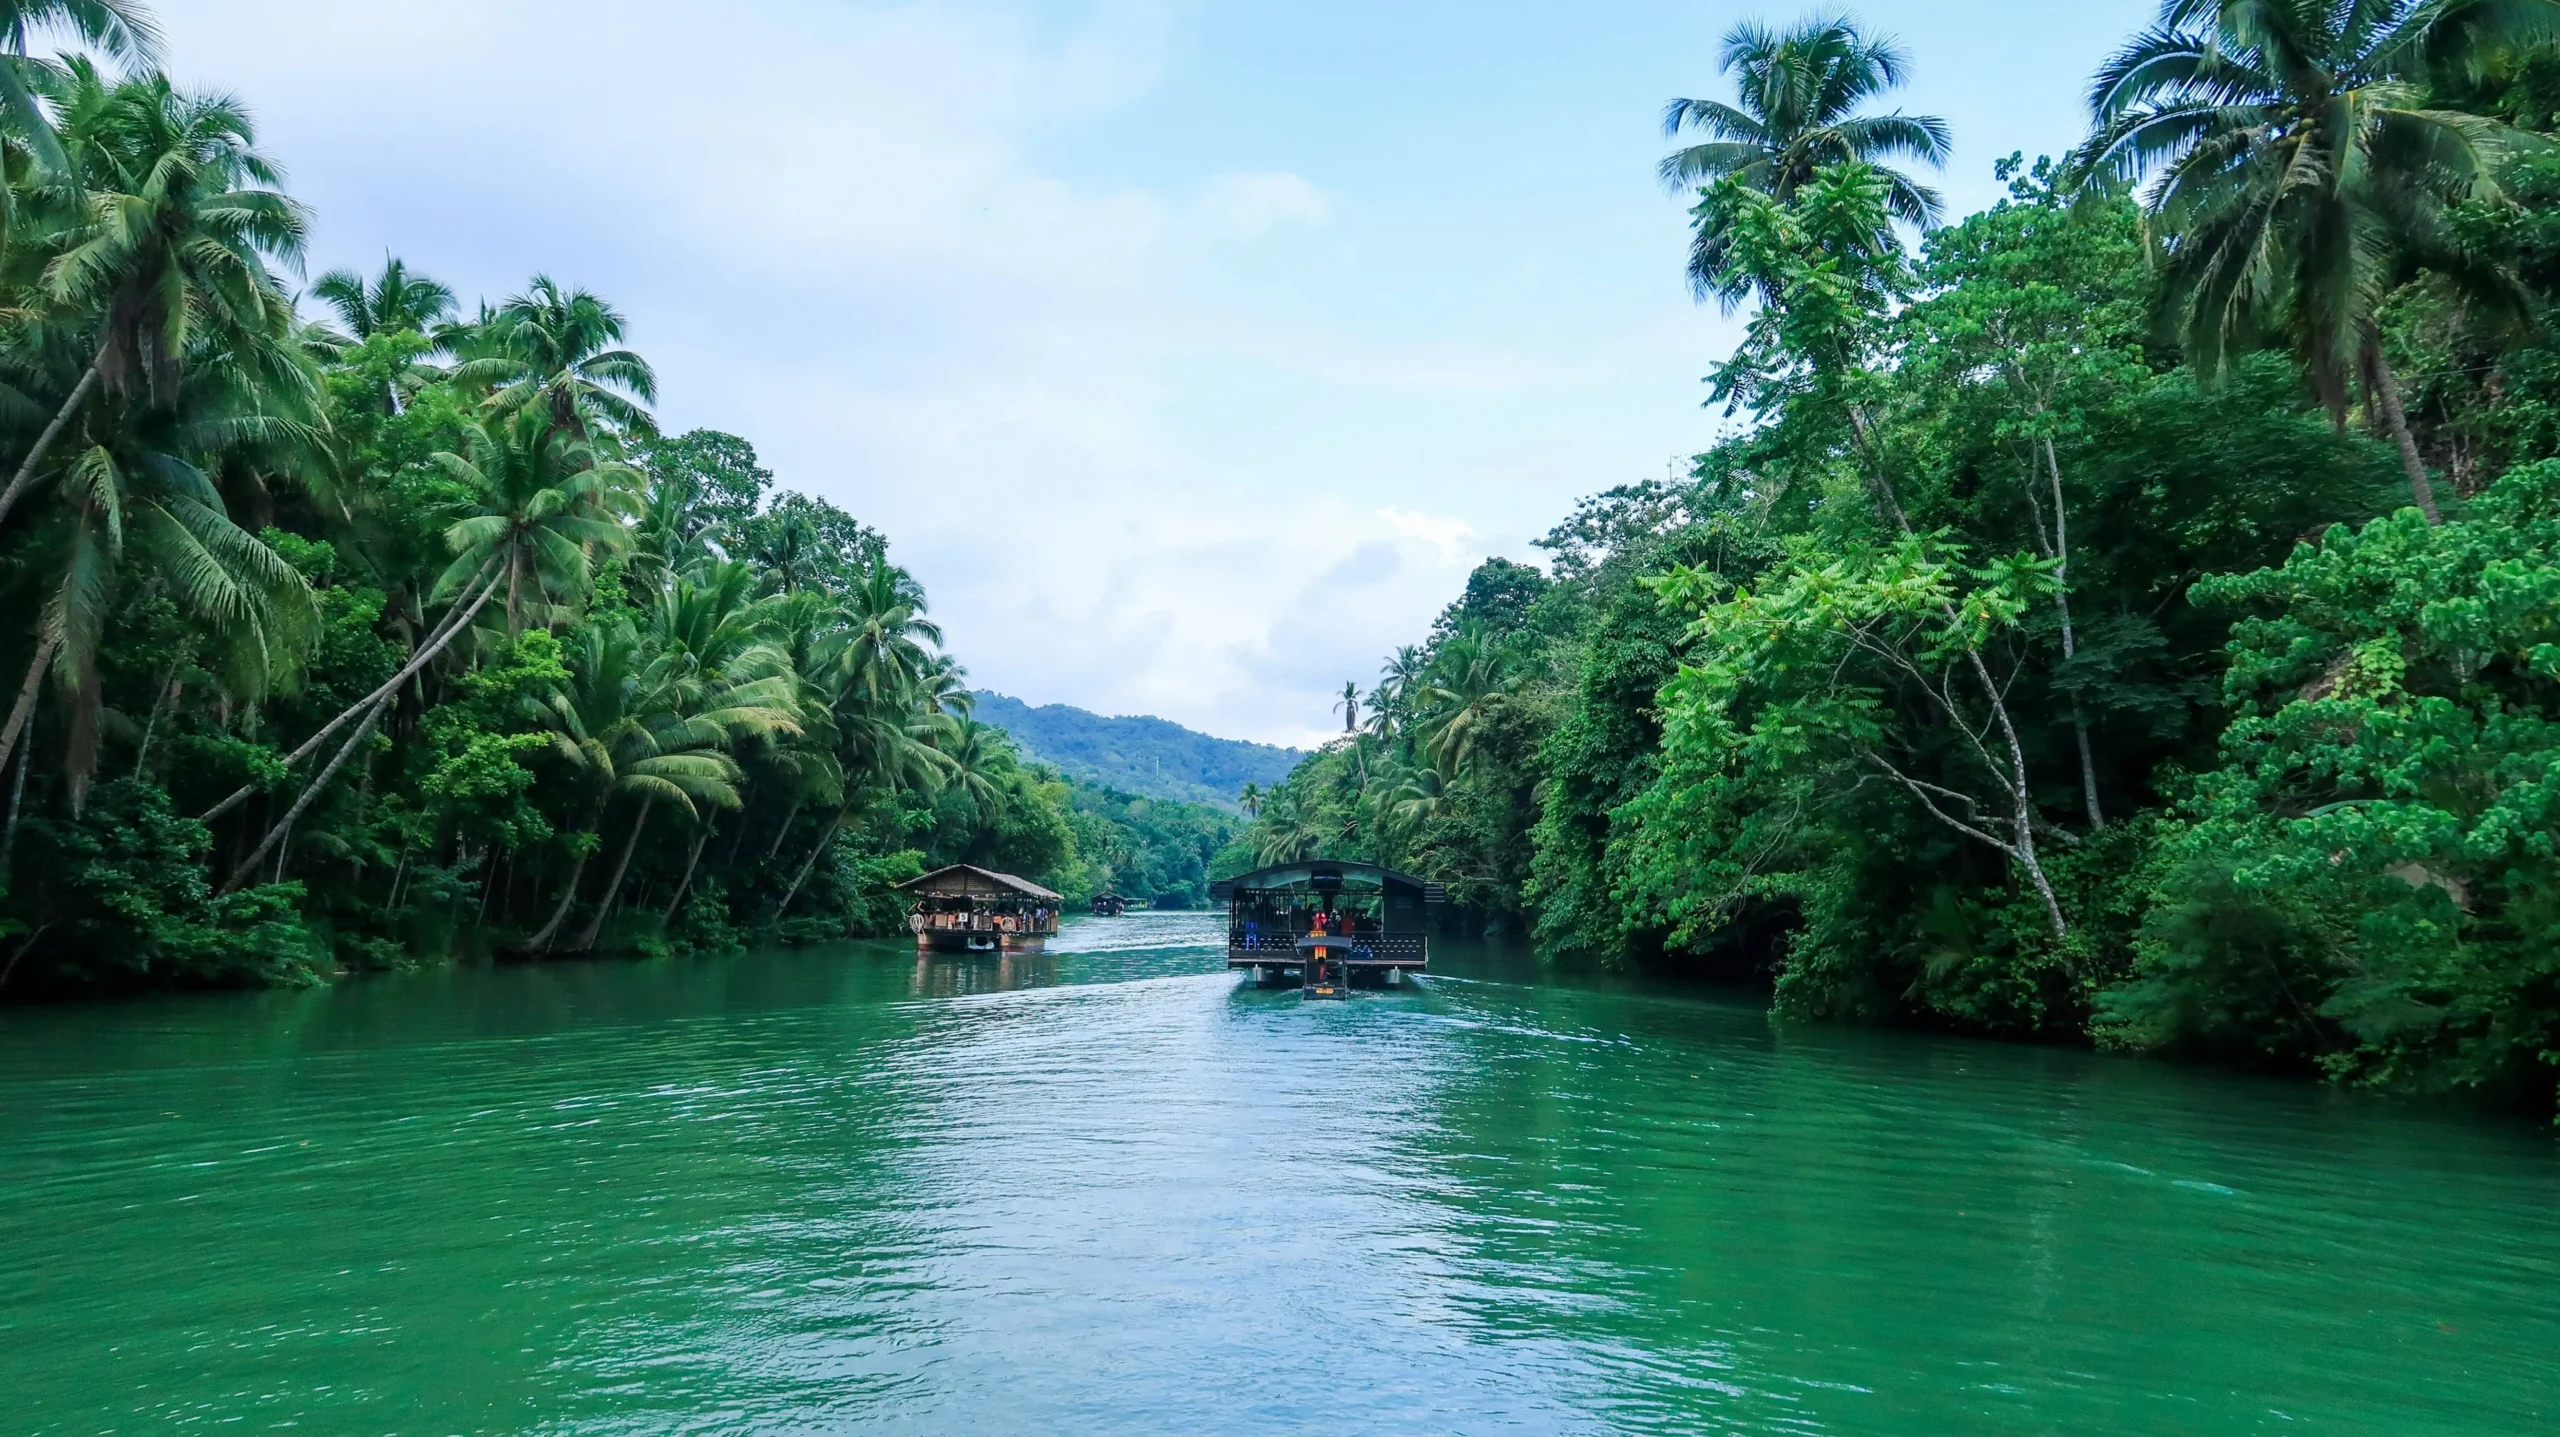 Loboc river - tourist spot in bohol